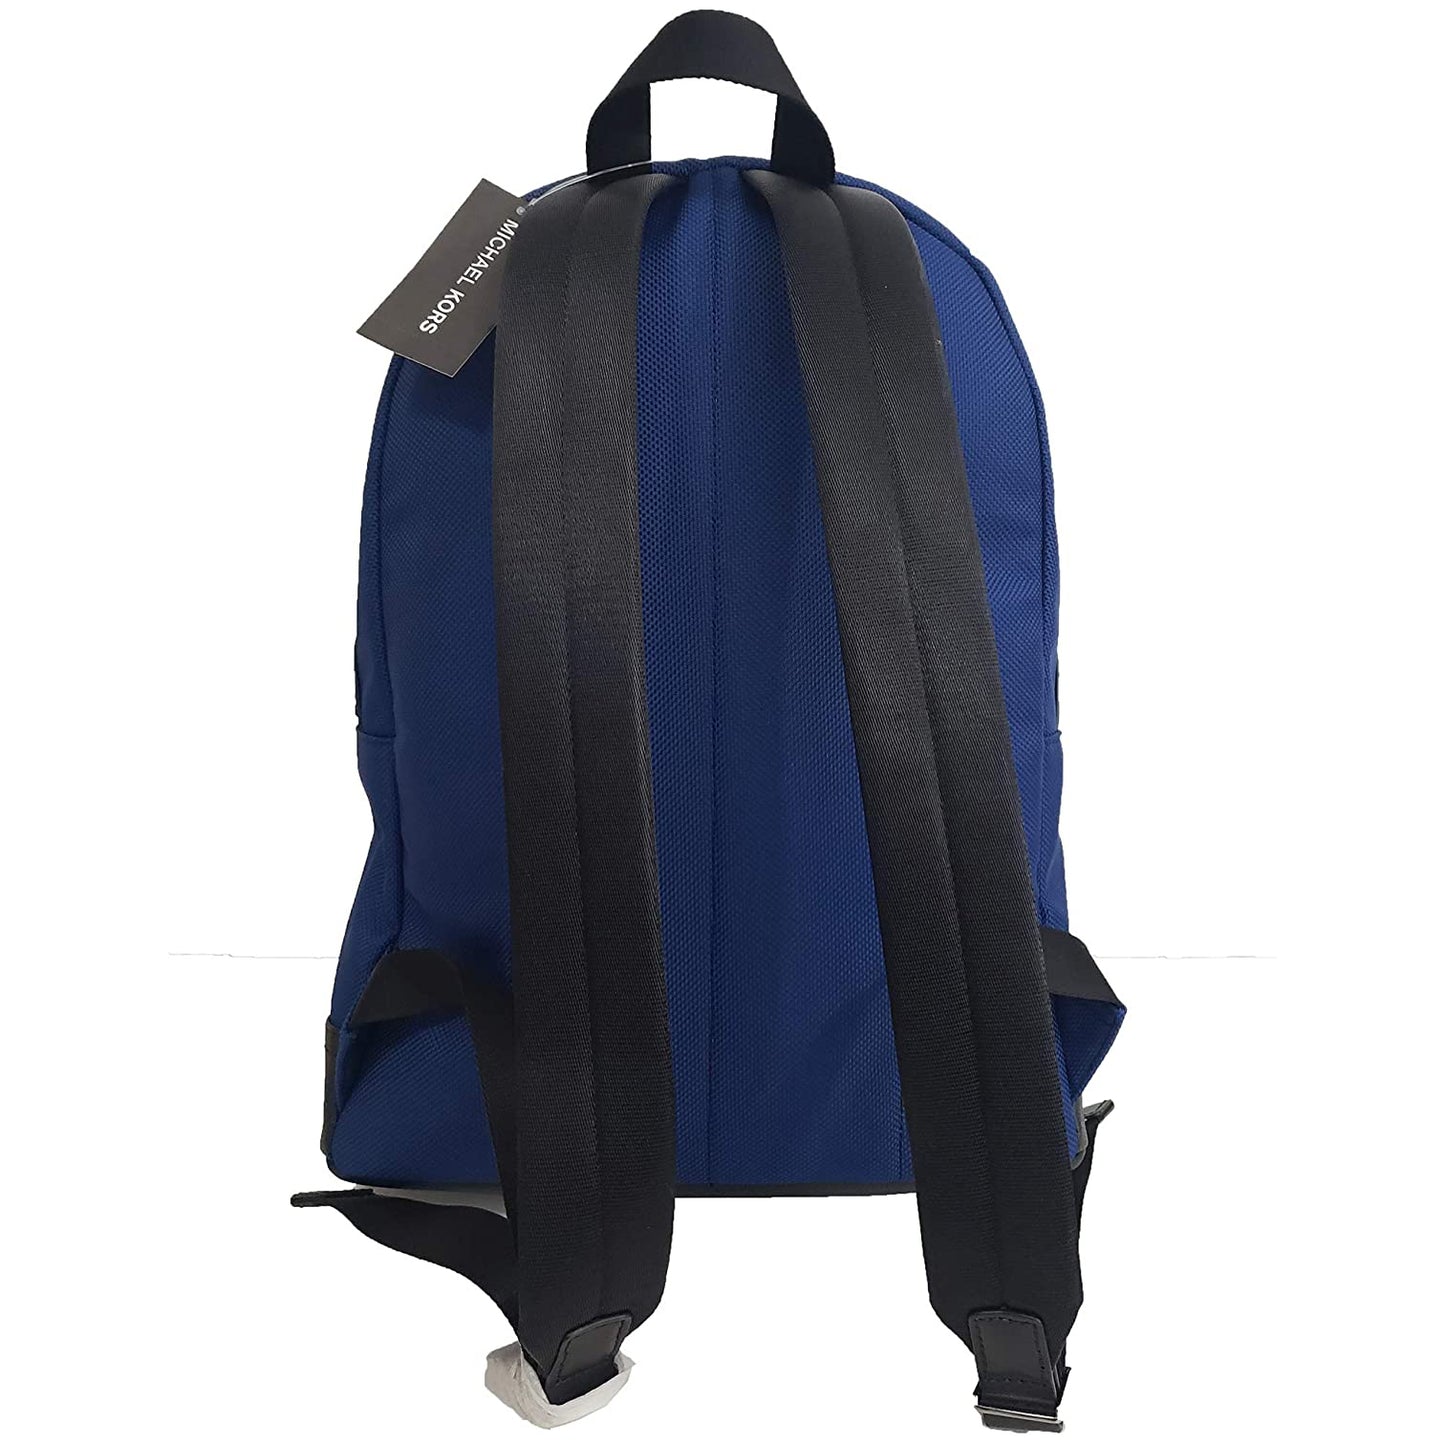 Shop Michael Kors Men's Backpacks